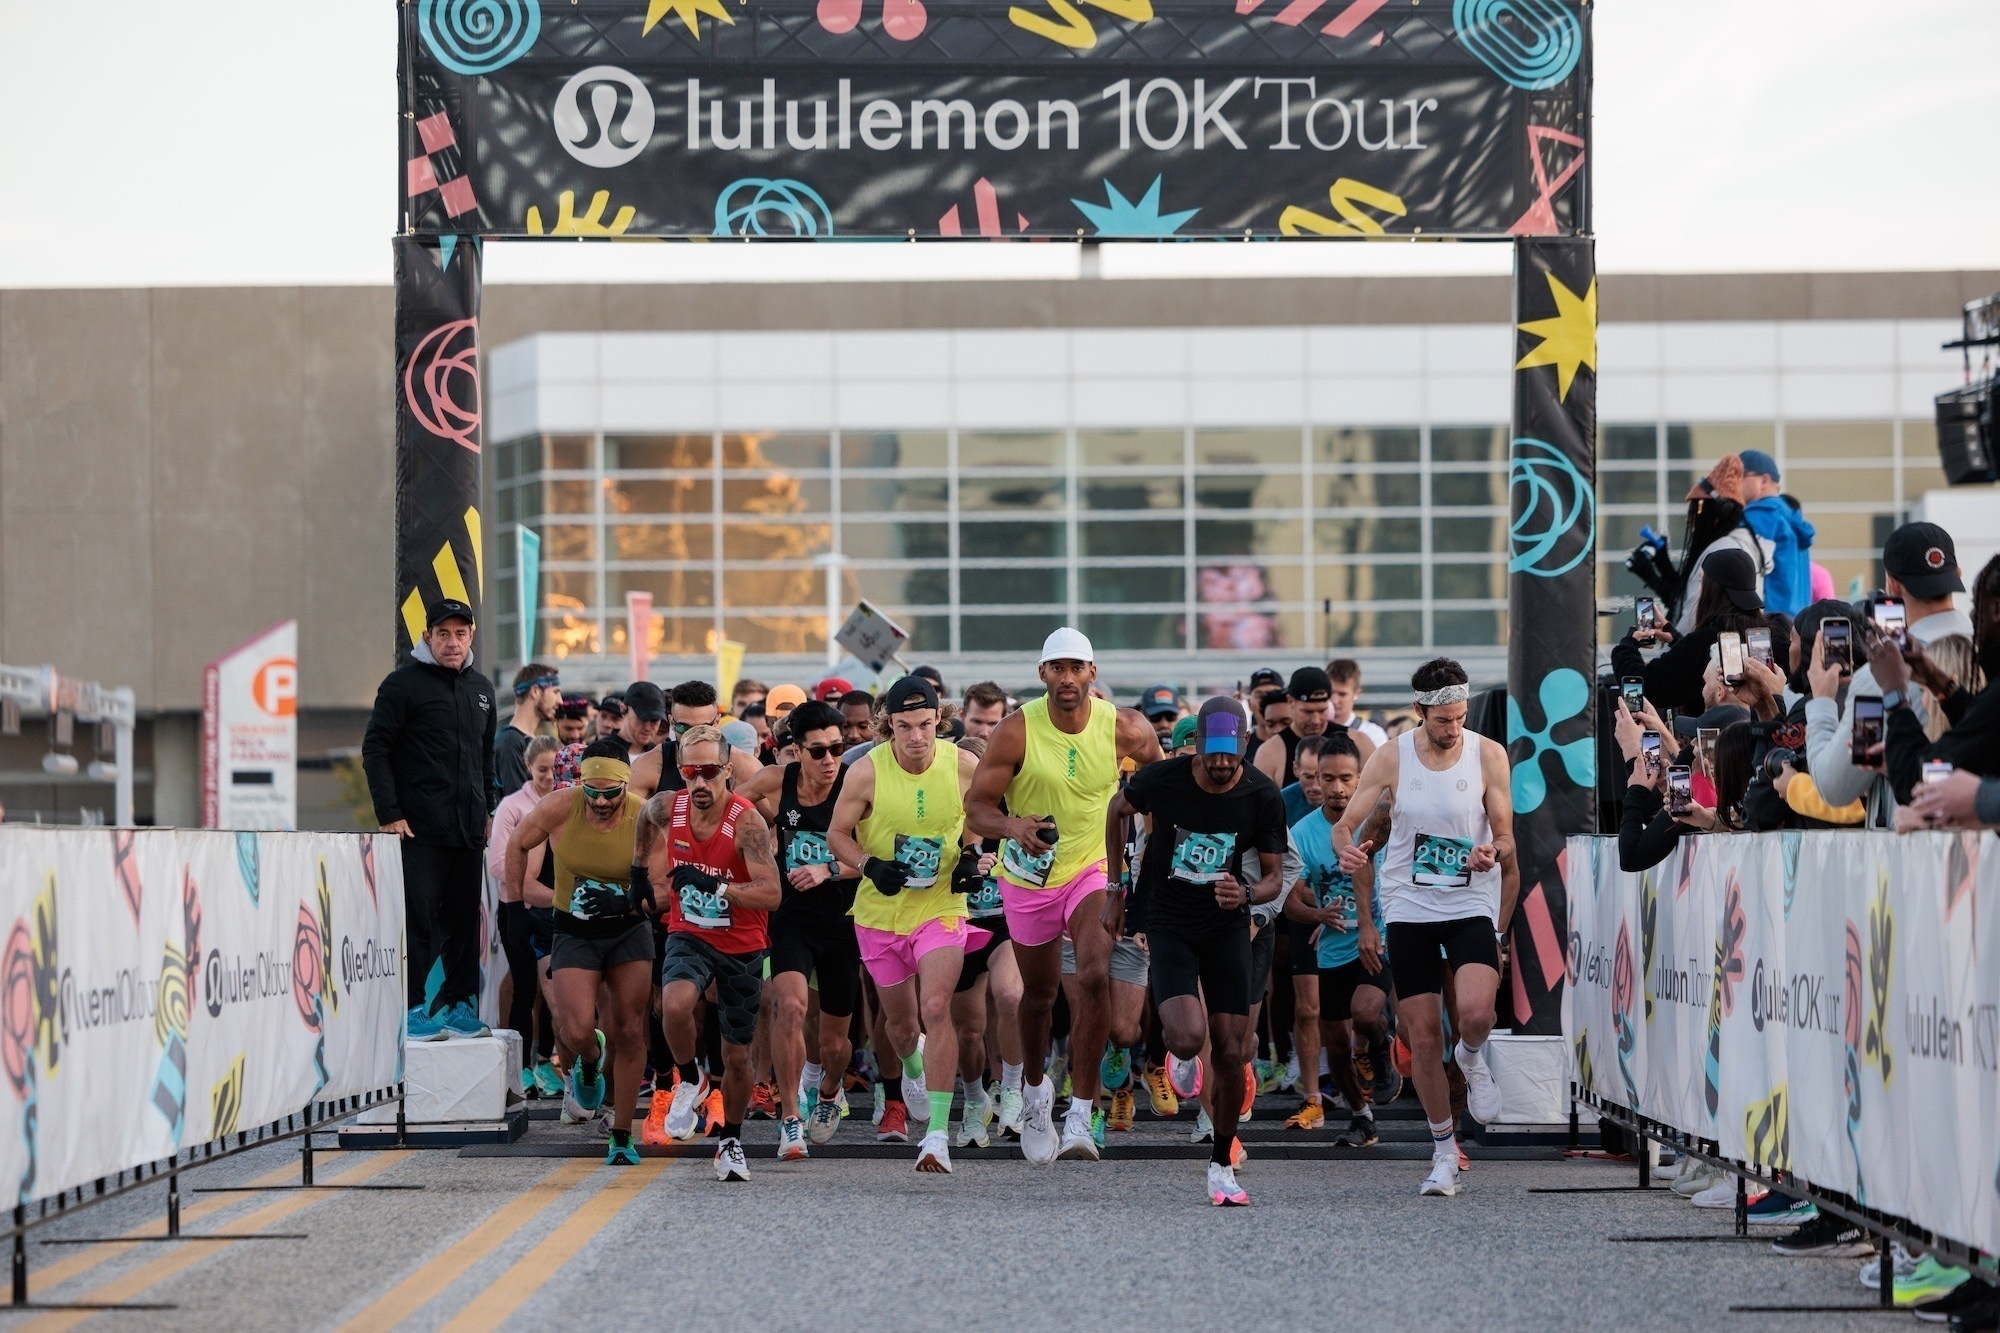 Atlanta runners start the party at the Lululemon 10k Tour